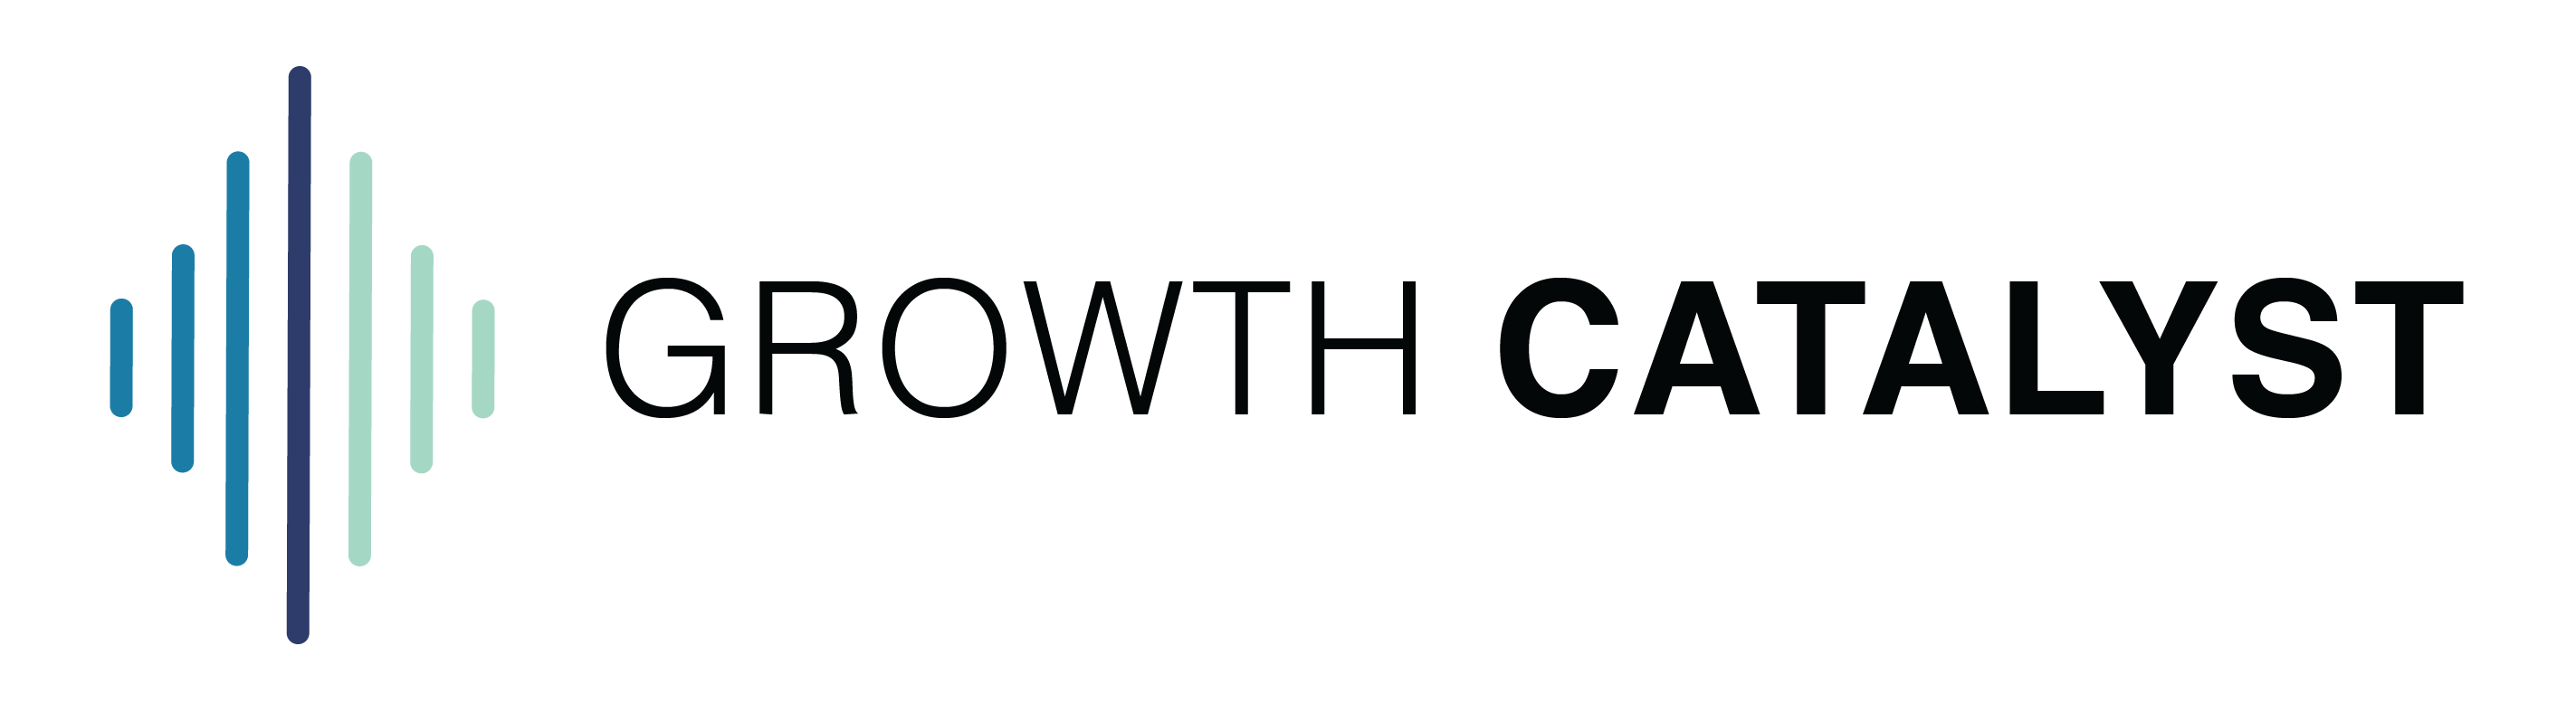 Growth Catalyst Original (1) (1)